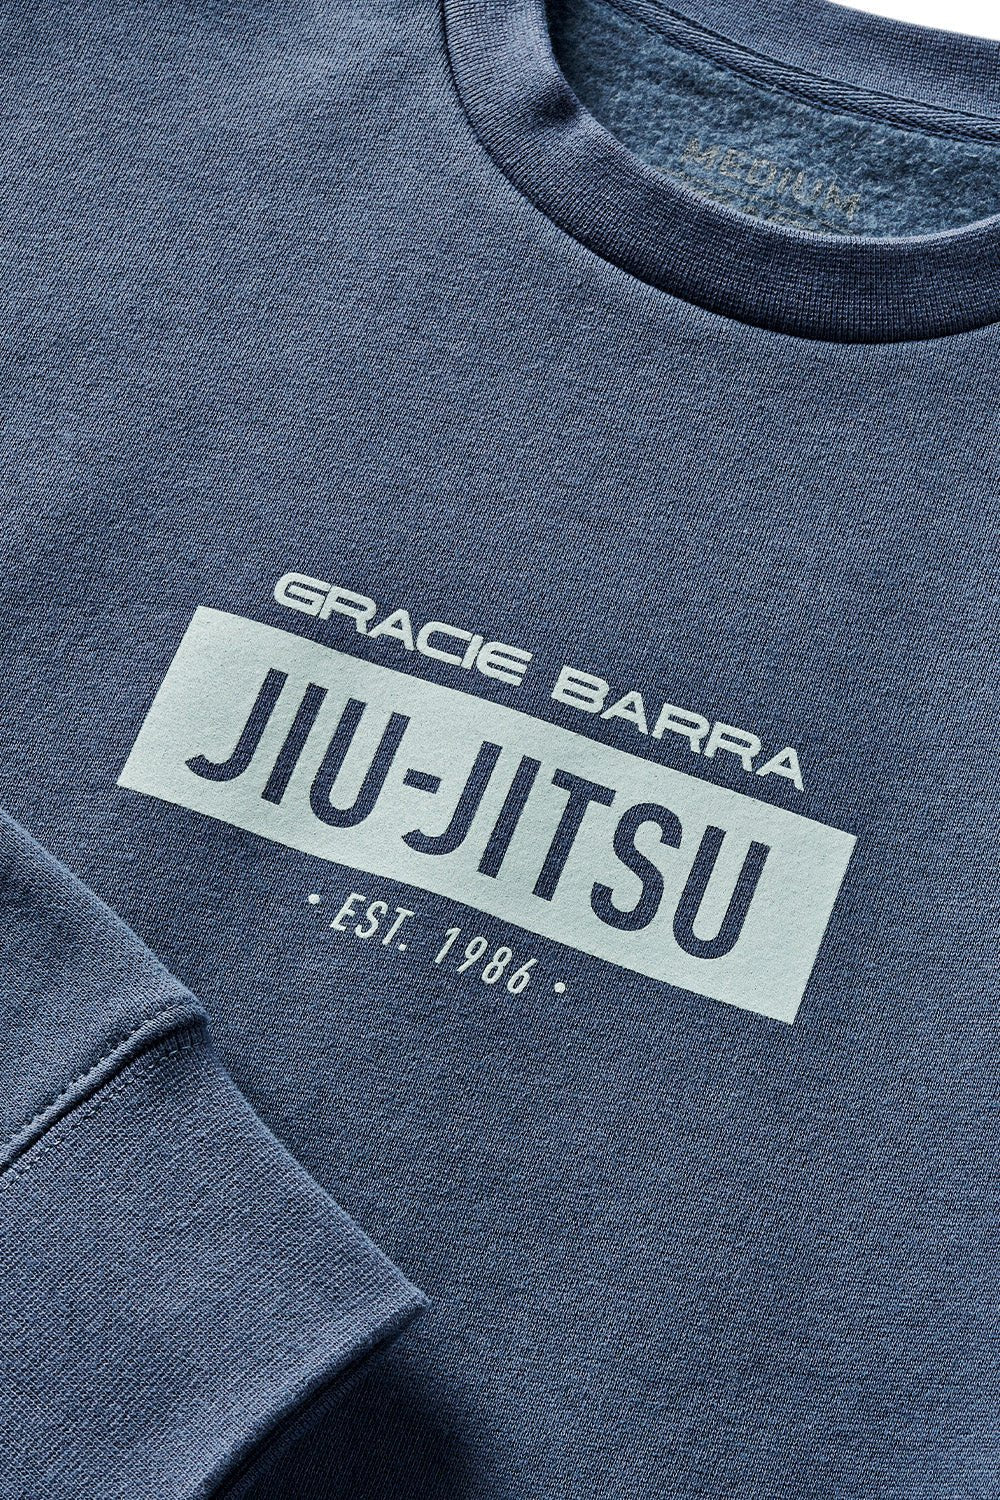 Jiu Jitsu 24/7 Mens Crewneck Sweater - Blue